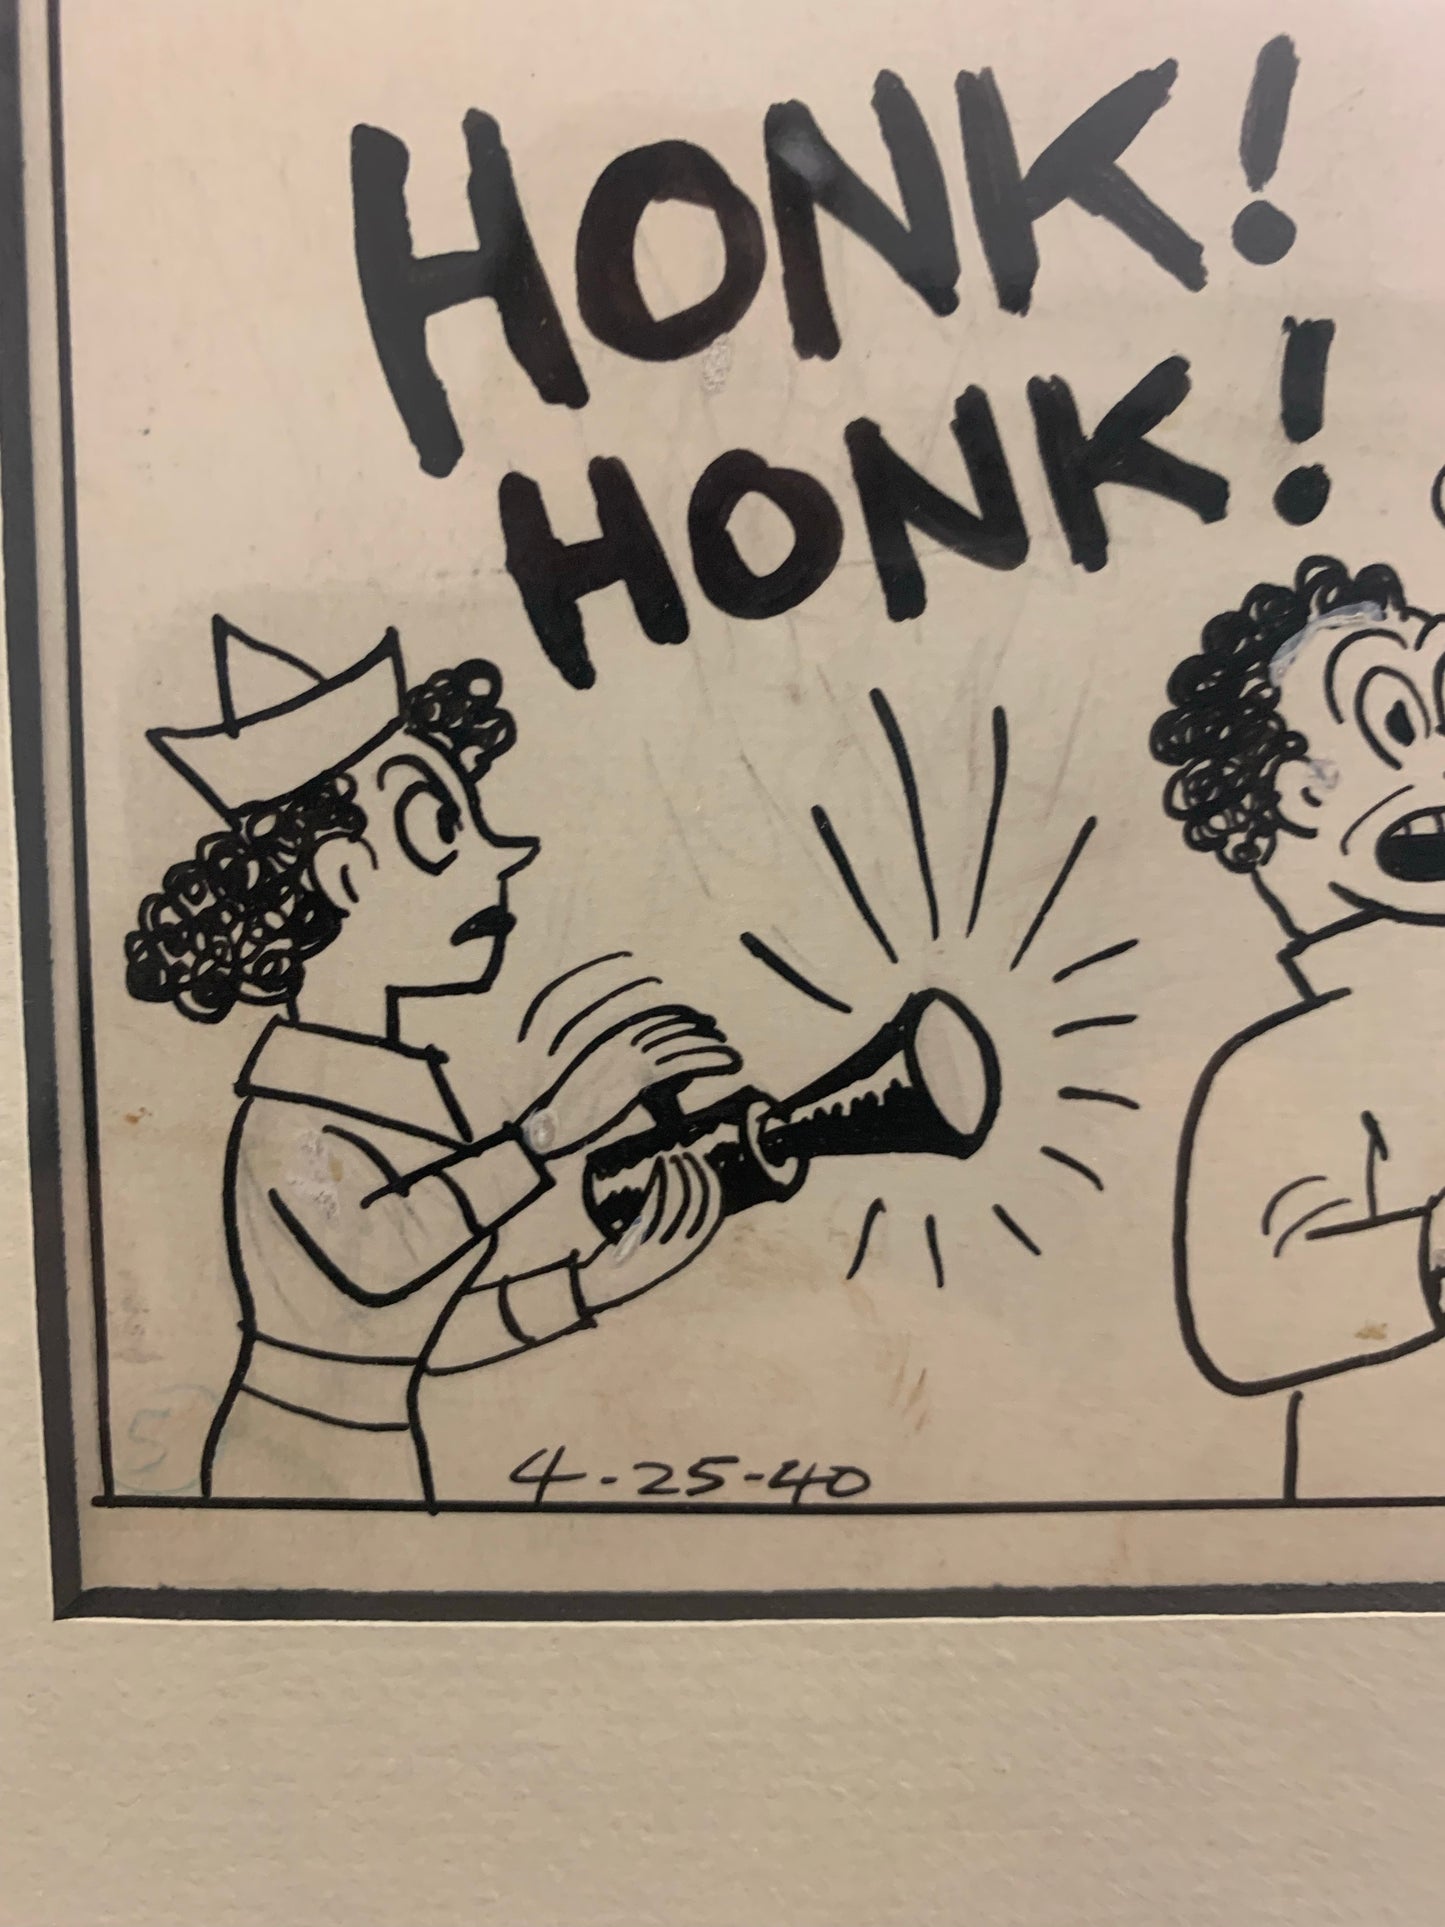 1940 Original Dental Themed Comic Strip